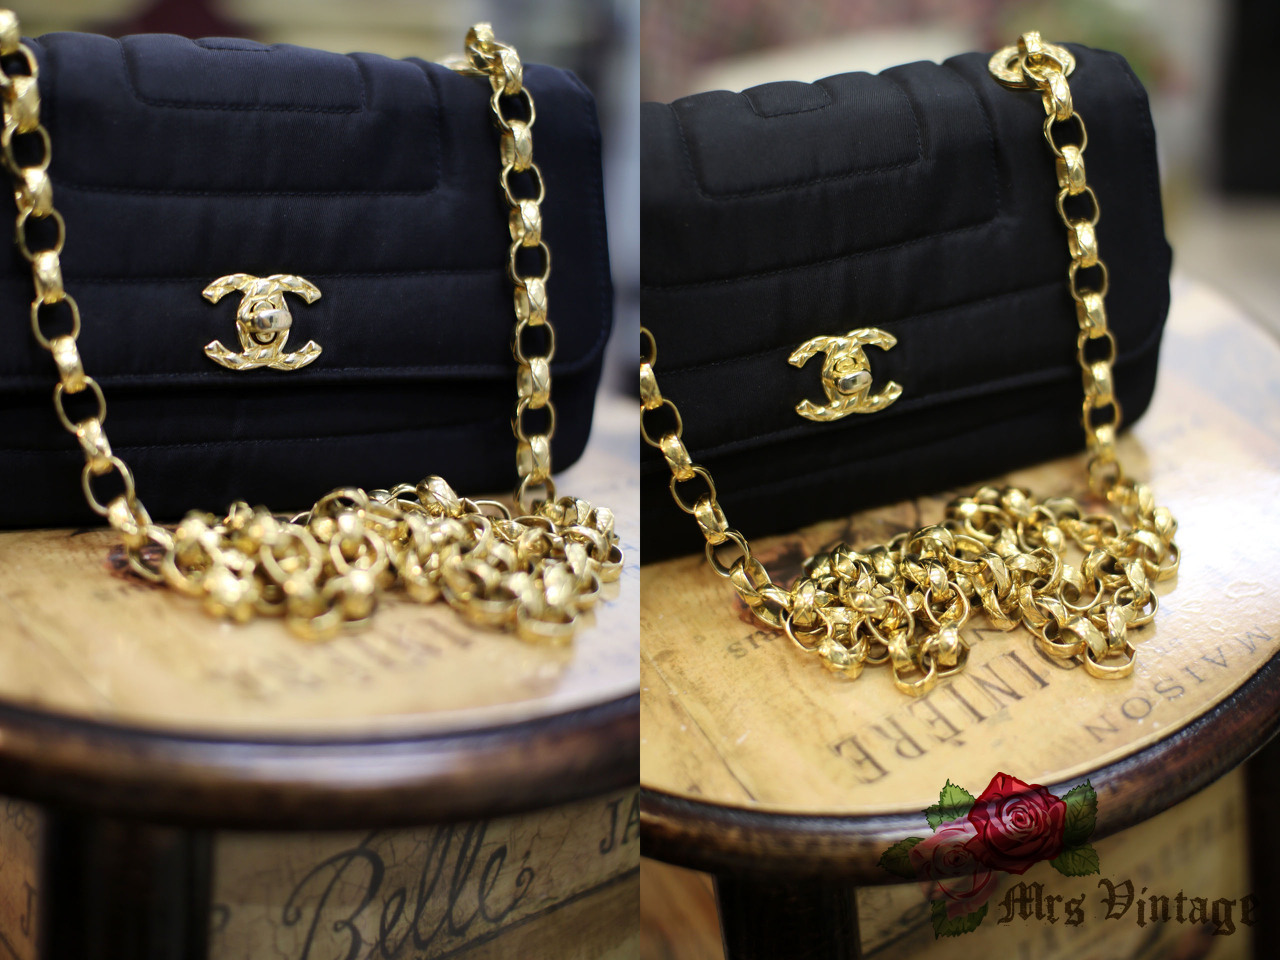 Vintage Chanel Nylon Black Mini Bag Lovely - Mrs Vintage - Selling